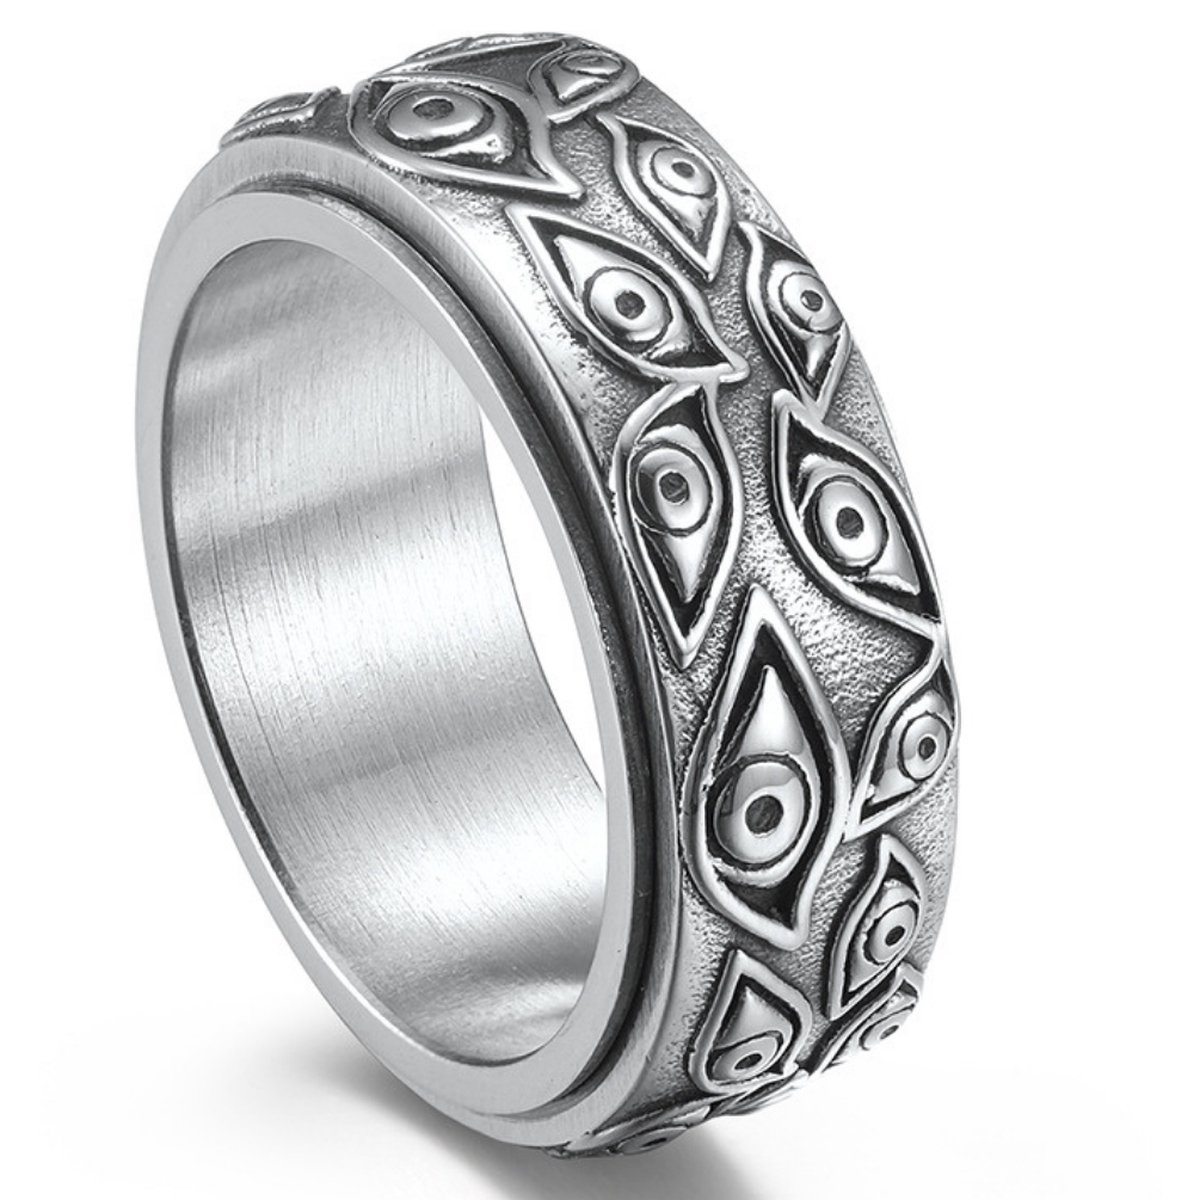 Ocean of Motion - Ring - Anxiety Ring - Stress Ring - Fidget Ring - Spinner Ring - Worry Ring - Zilver - Overprikkeld Brein - Bescherming - Chirurgisch staal - RVS - Ringmaat 55/17.50 mm - Dames - Heren